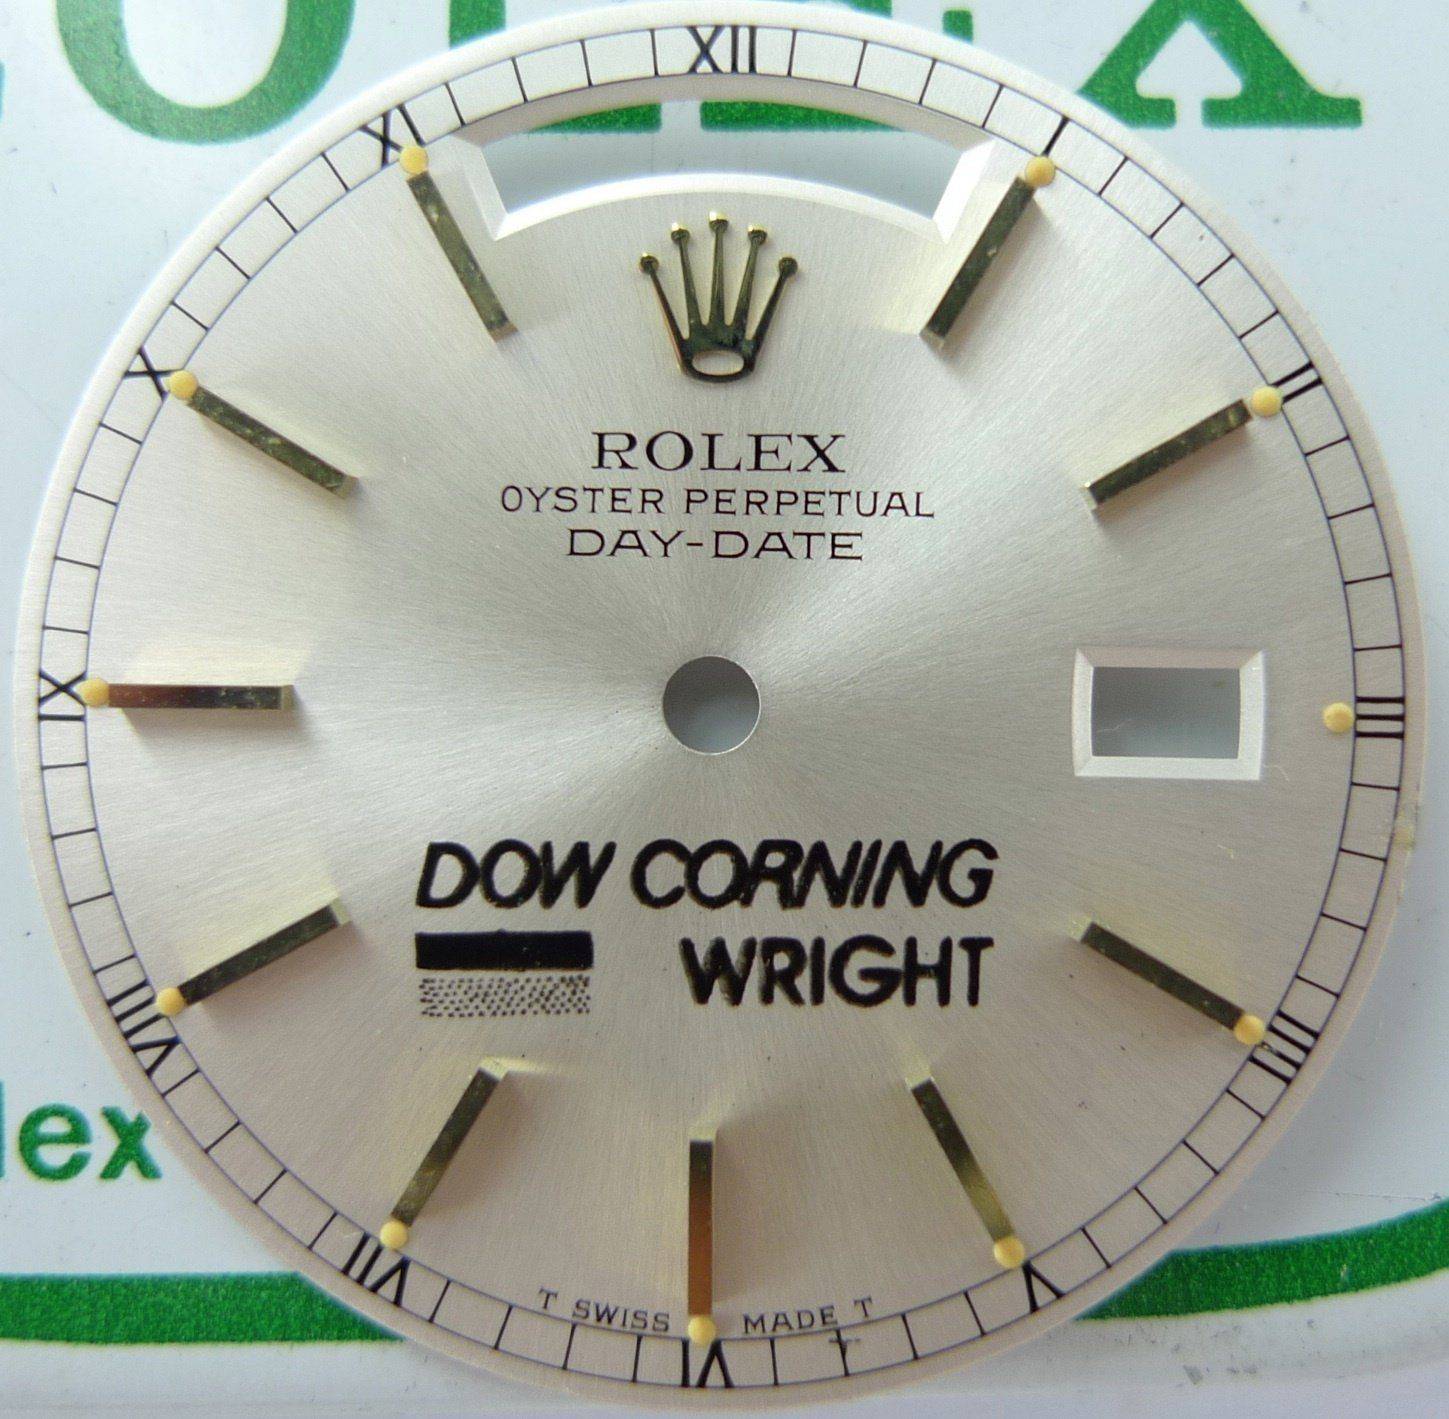 2dow+corning+rolex+logo+dial.jpg